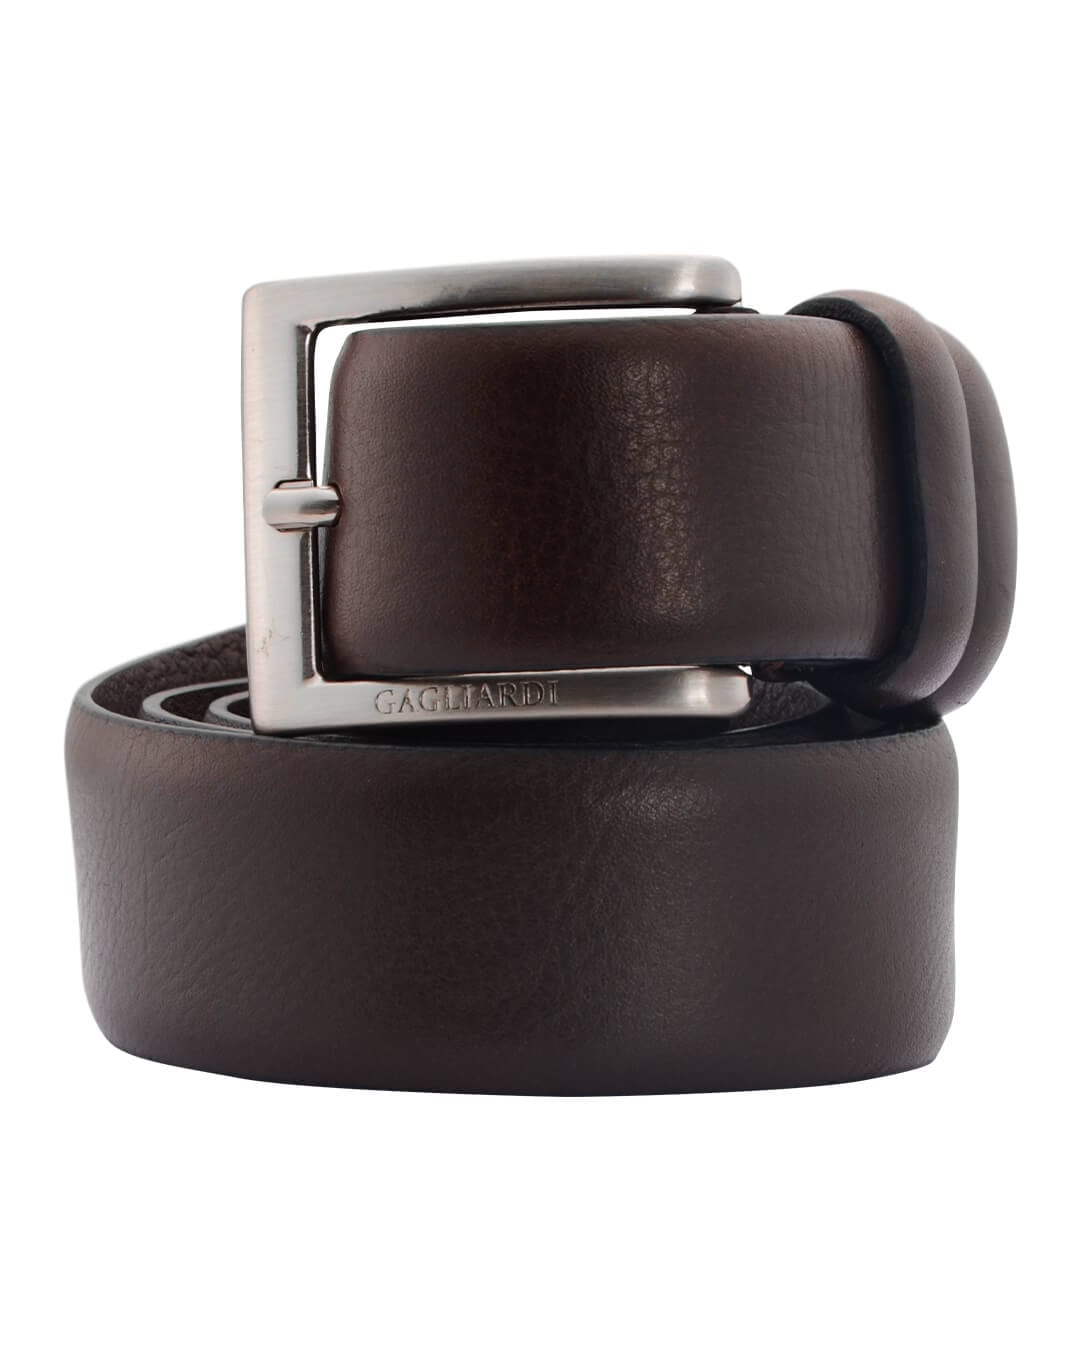 Gagliardi Belts Gagliardi  Brown Leather Belt With Branding On Buckle